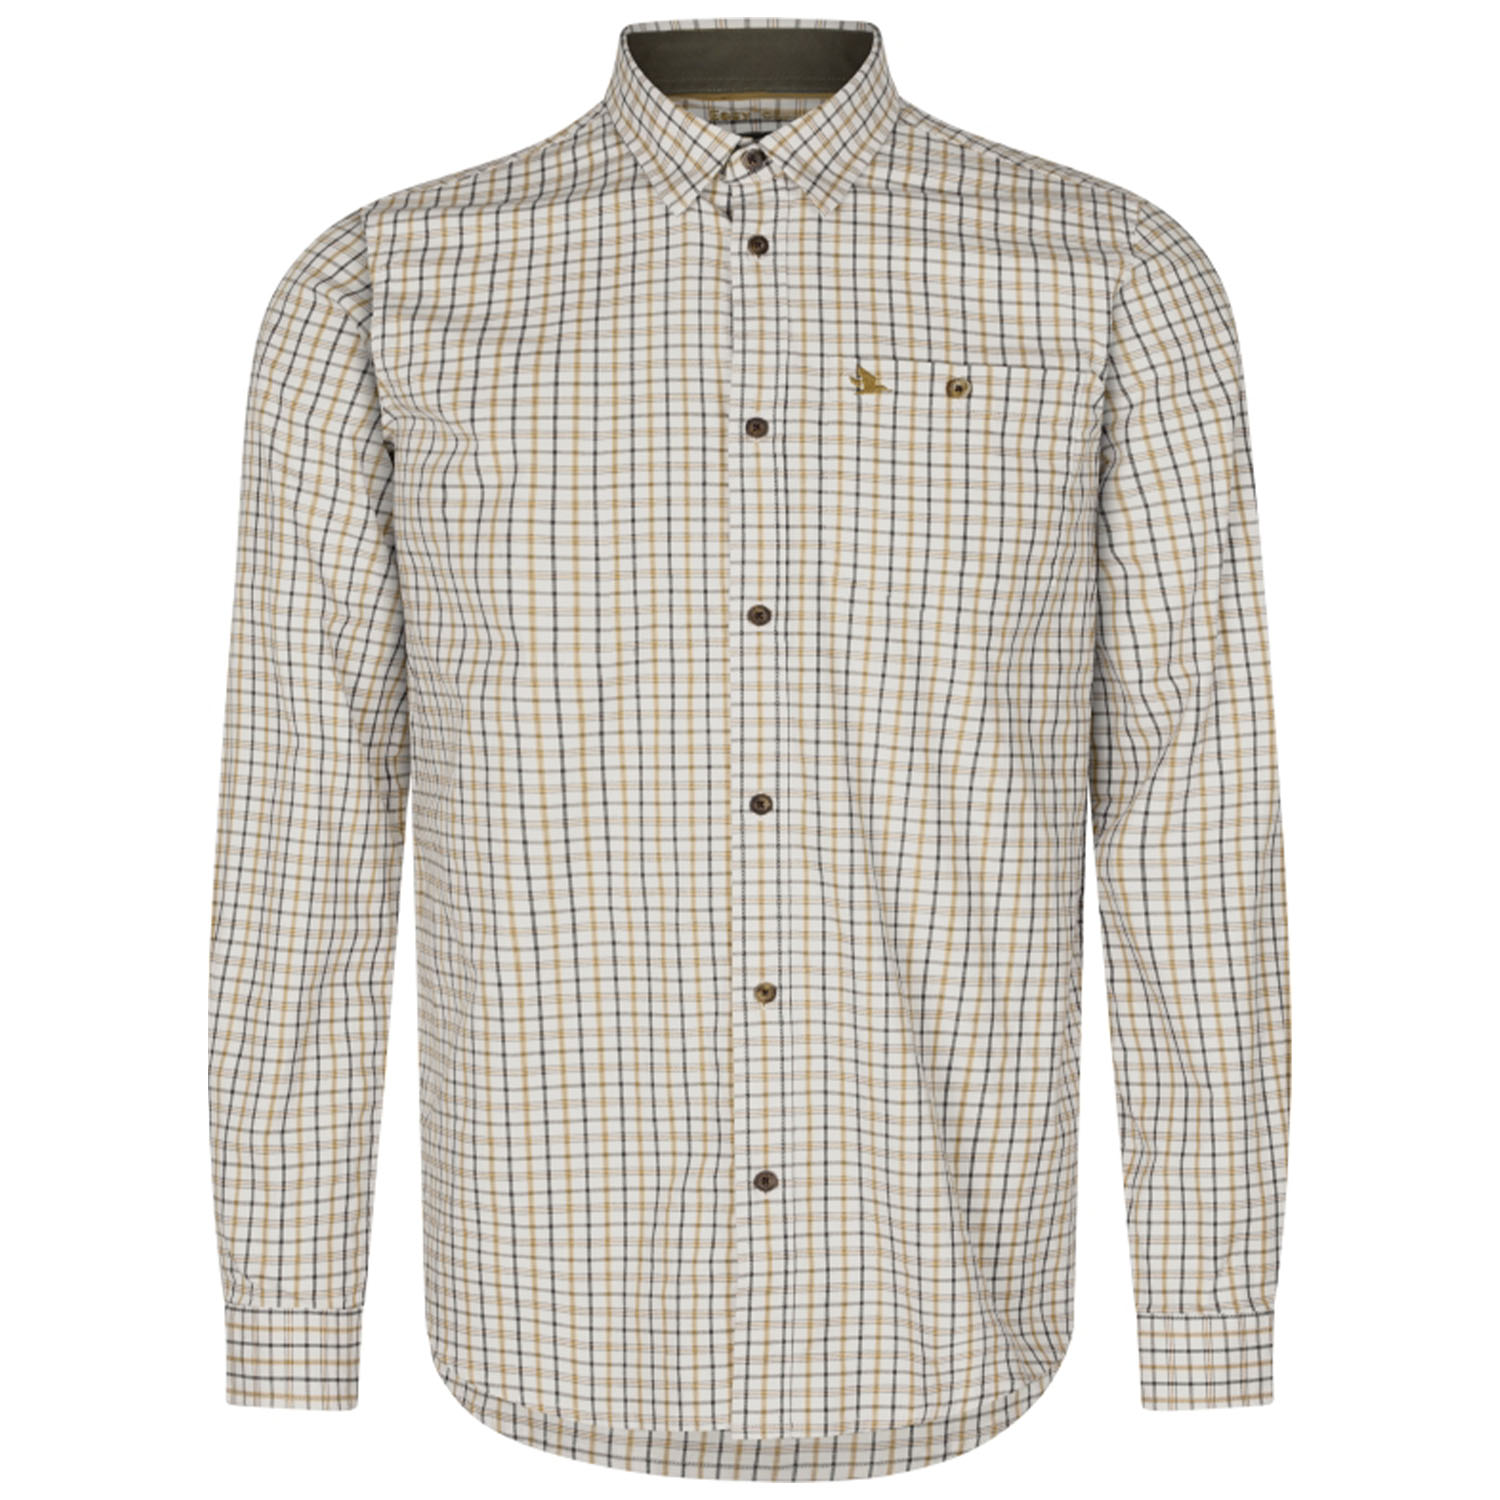 Seeland shirt oxford (Classic Blue/Classic Brown Check) - Hunting Shirts